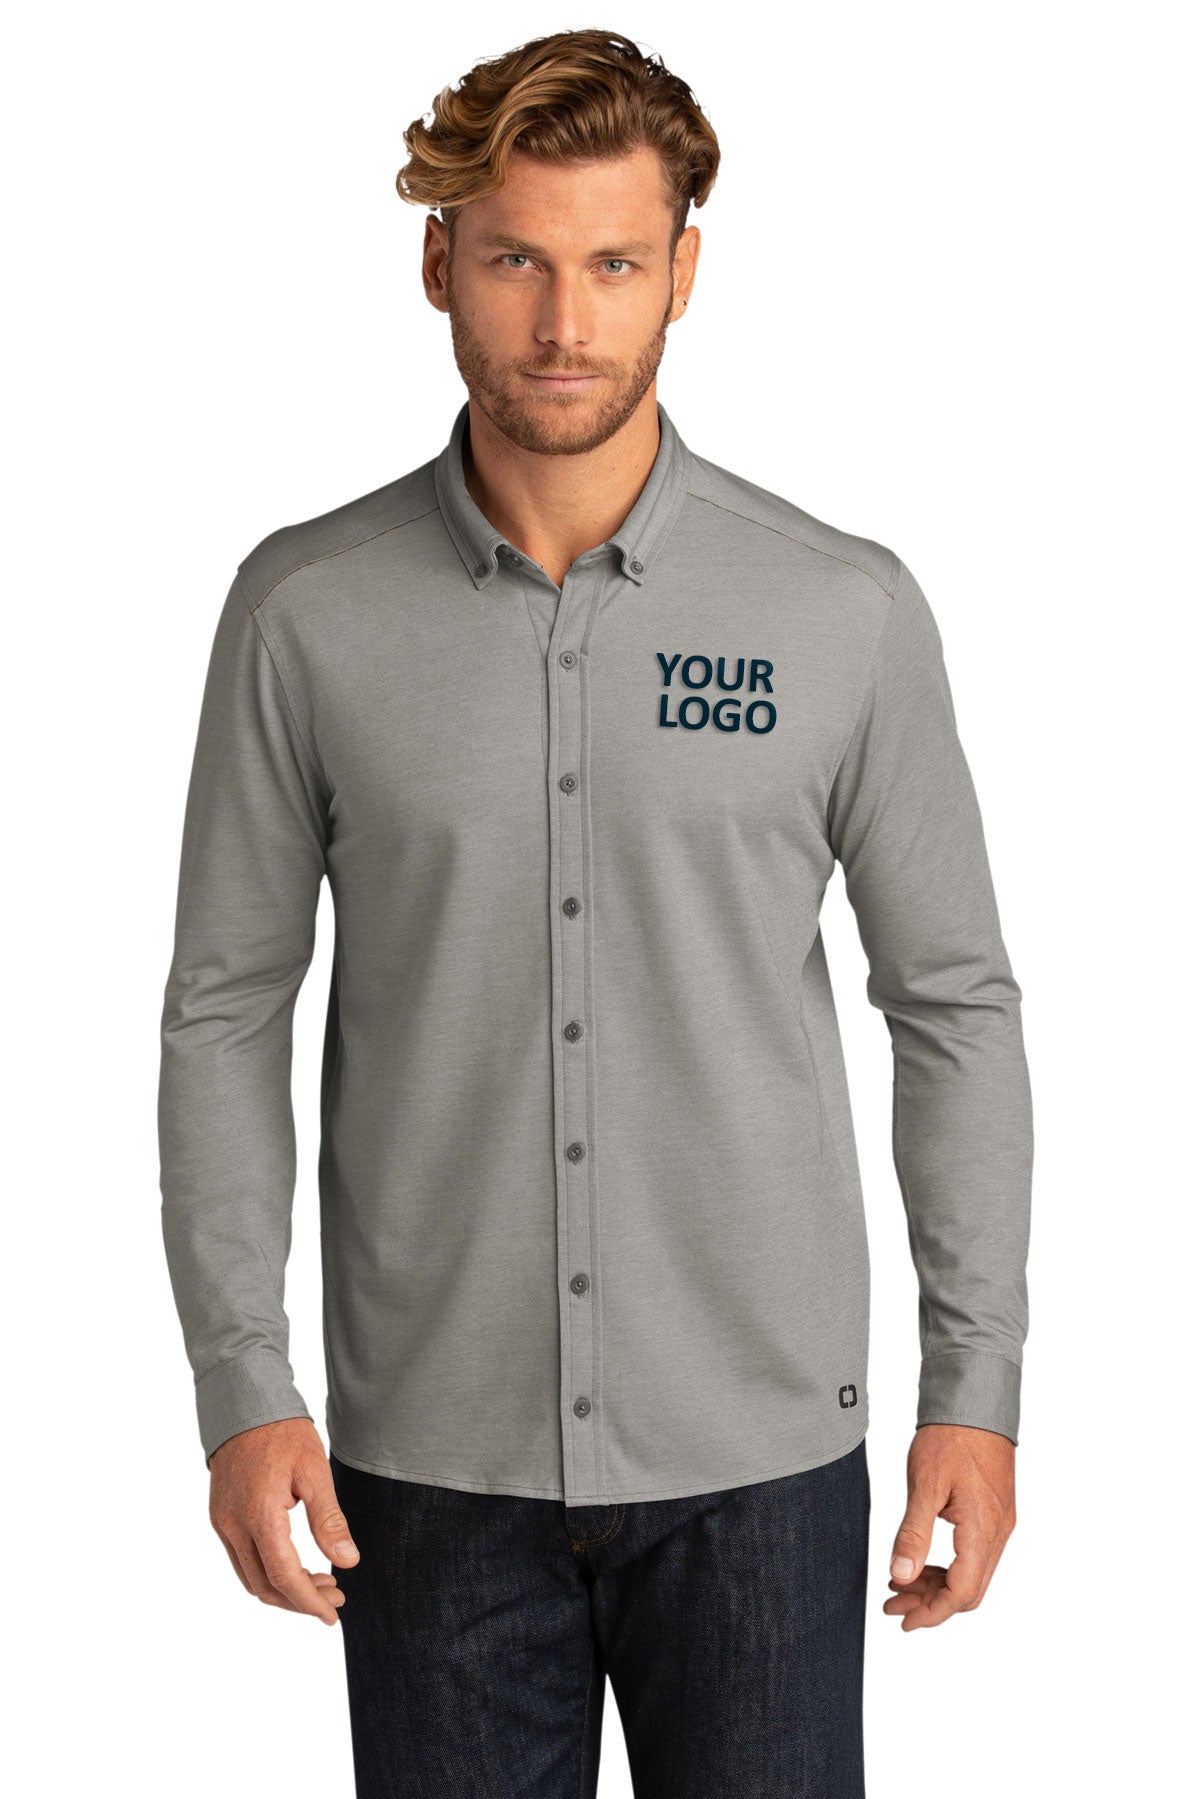 custom work shirts OGIO Tarmac Grey Heather OG145